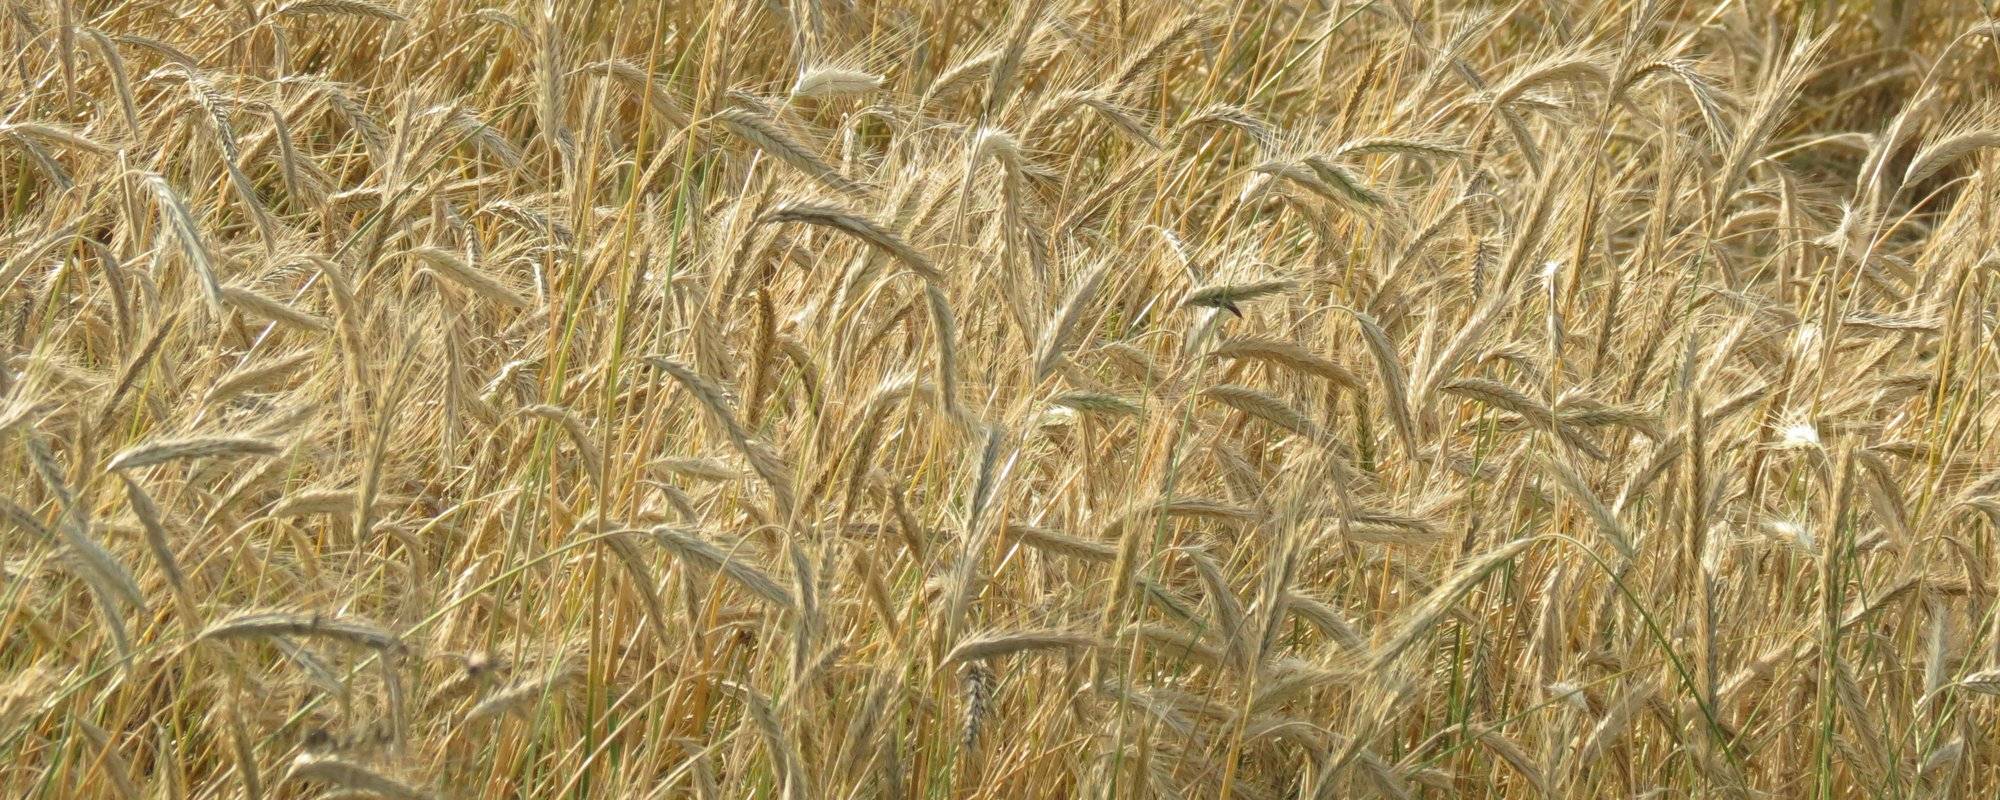 Lato na wsi. Przepiękne, złociste pole // Summer in the countryside. A beautiful golden wheat field 